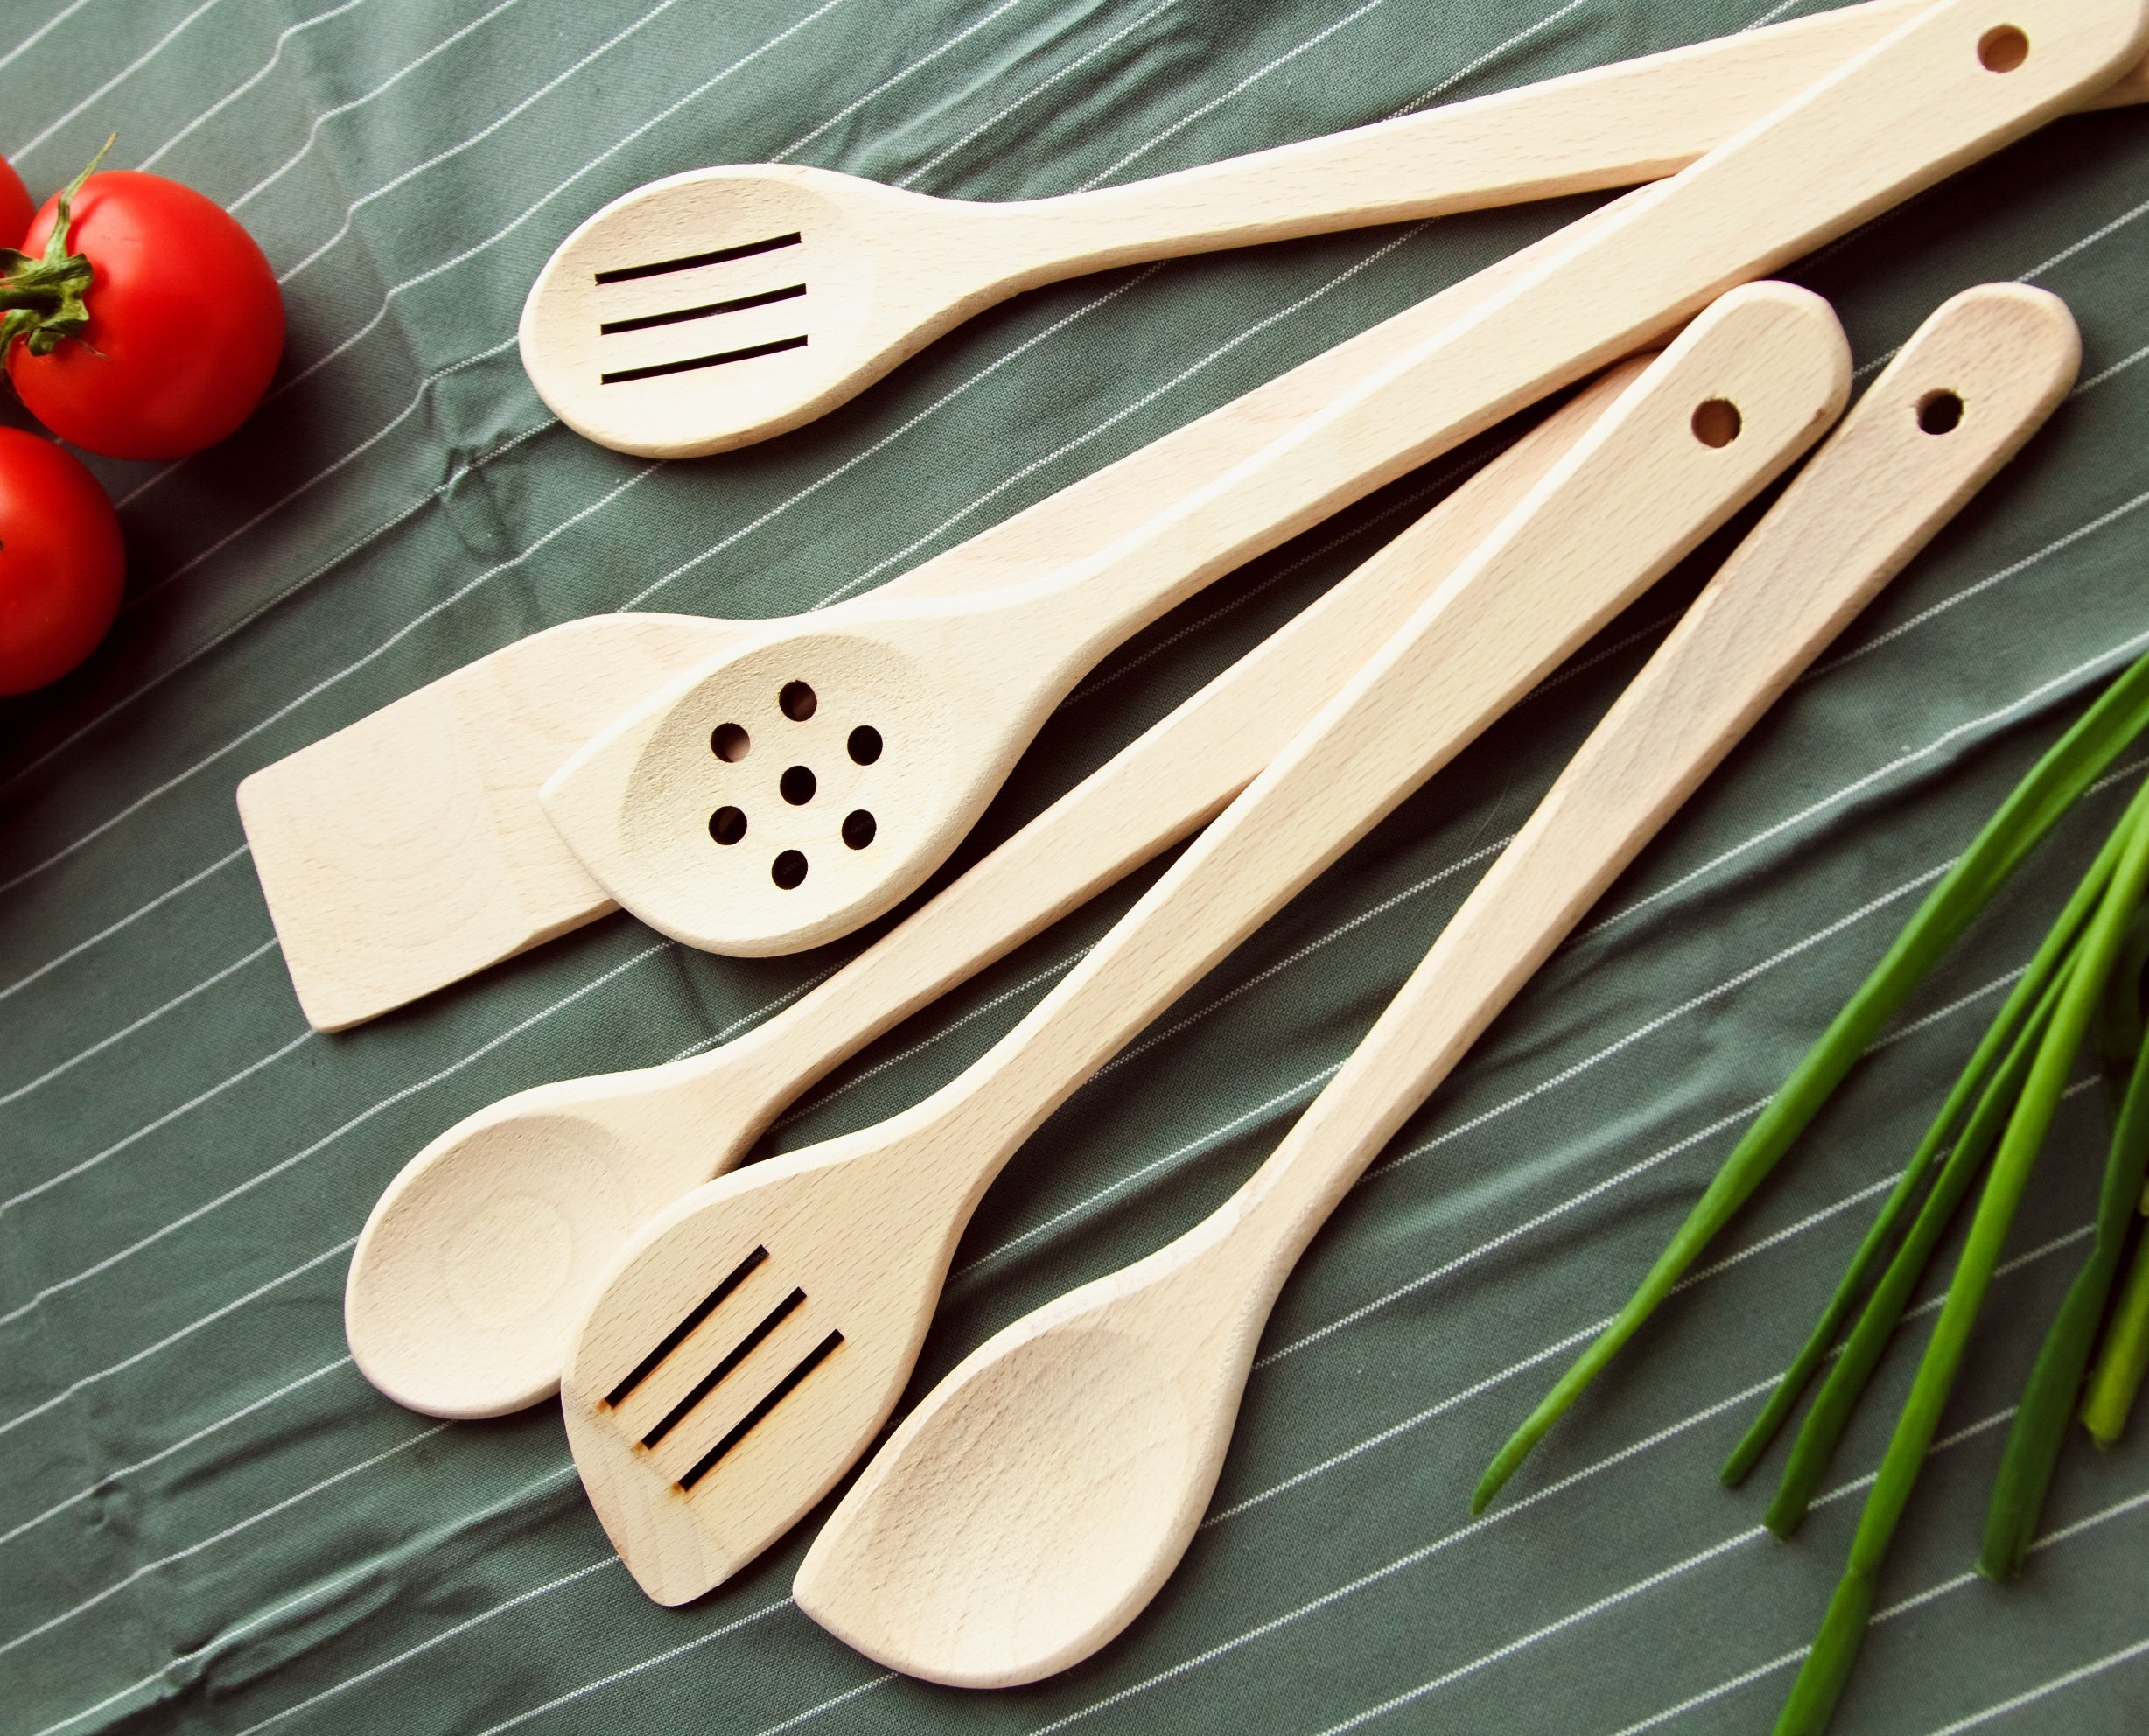 BlauKe Wooden Spoons for Cooking 8-Pack - Bamboo Kitchen Utensils Set - Nonstick Wooden Cooking Utensils - Wood Spatula Spoon Tongs Utensil Holder